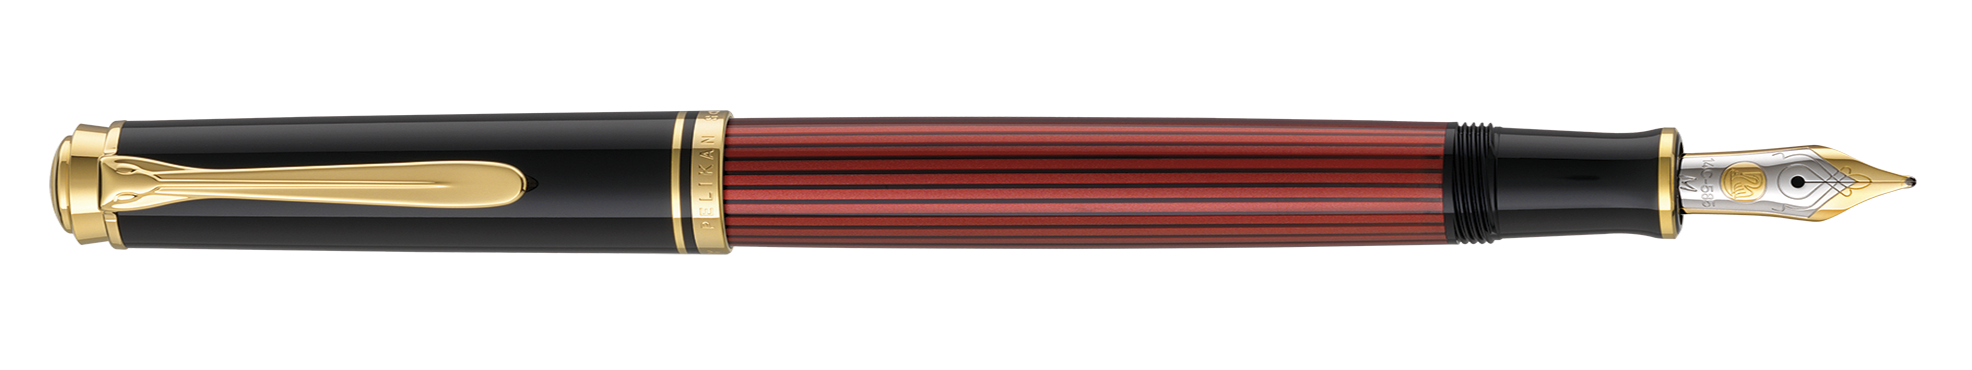 Souverän® 800 Schwarz-Rot